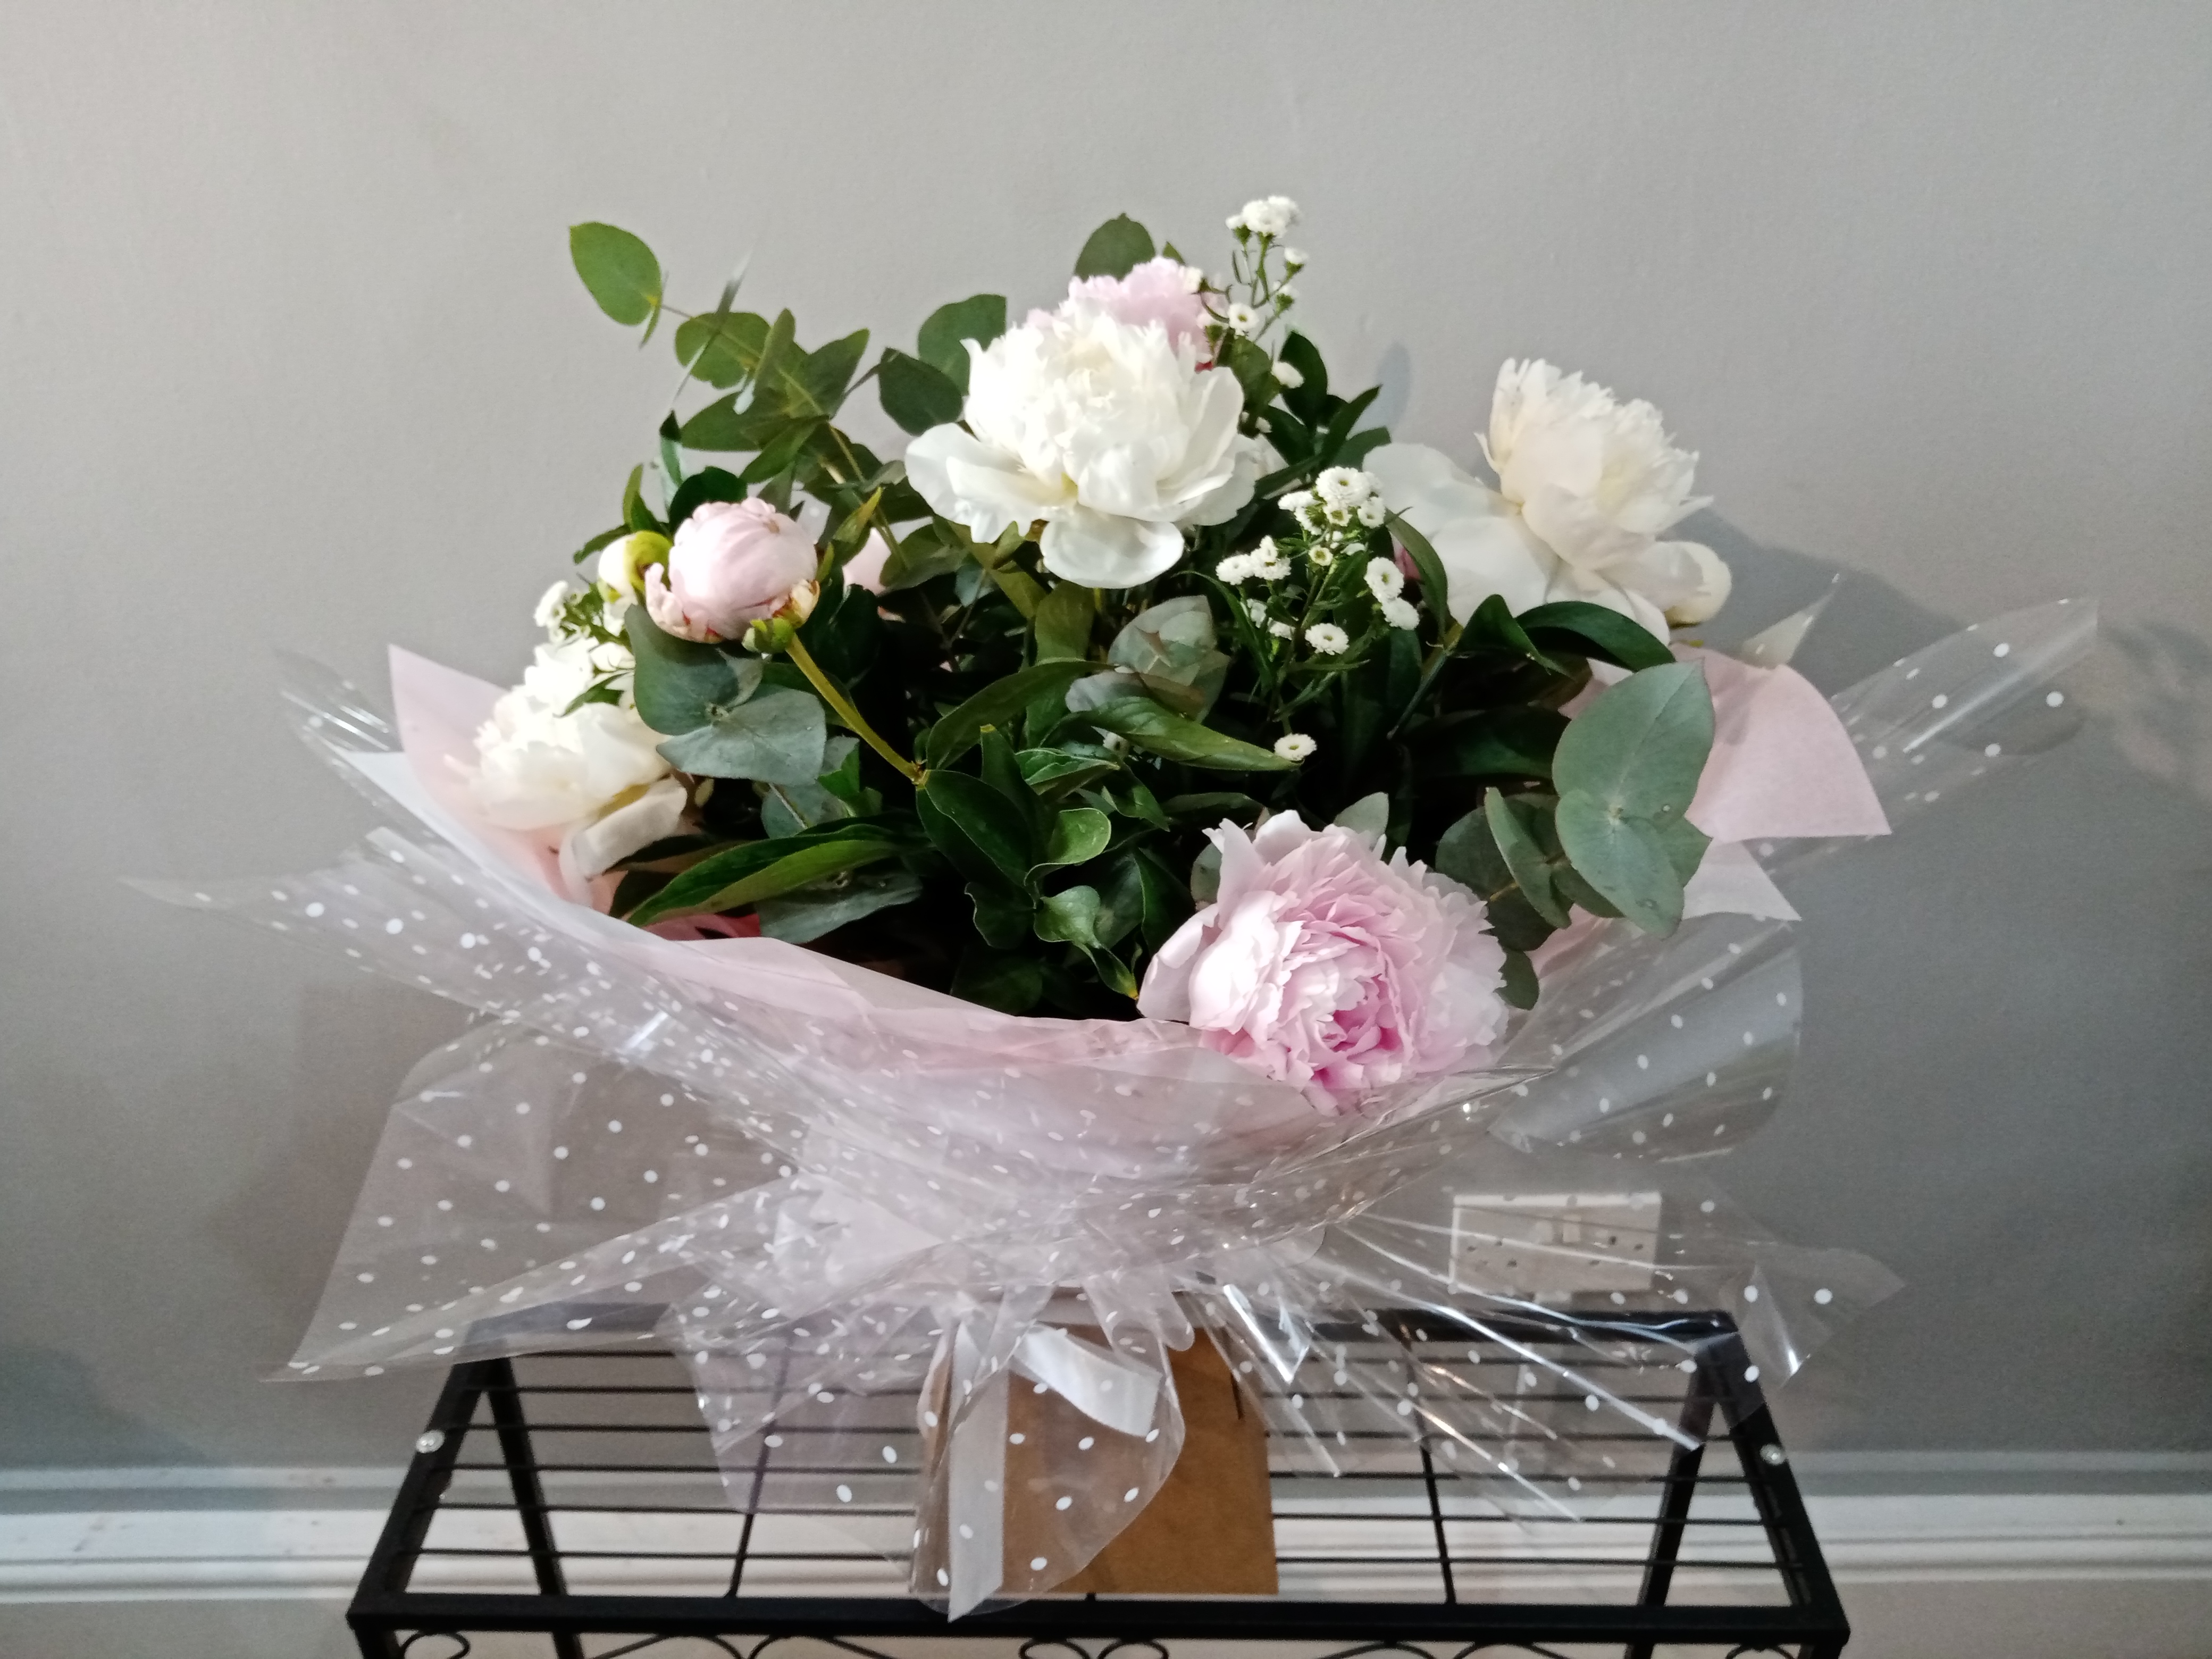 jo's florist telford flower arrangement 4